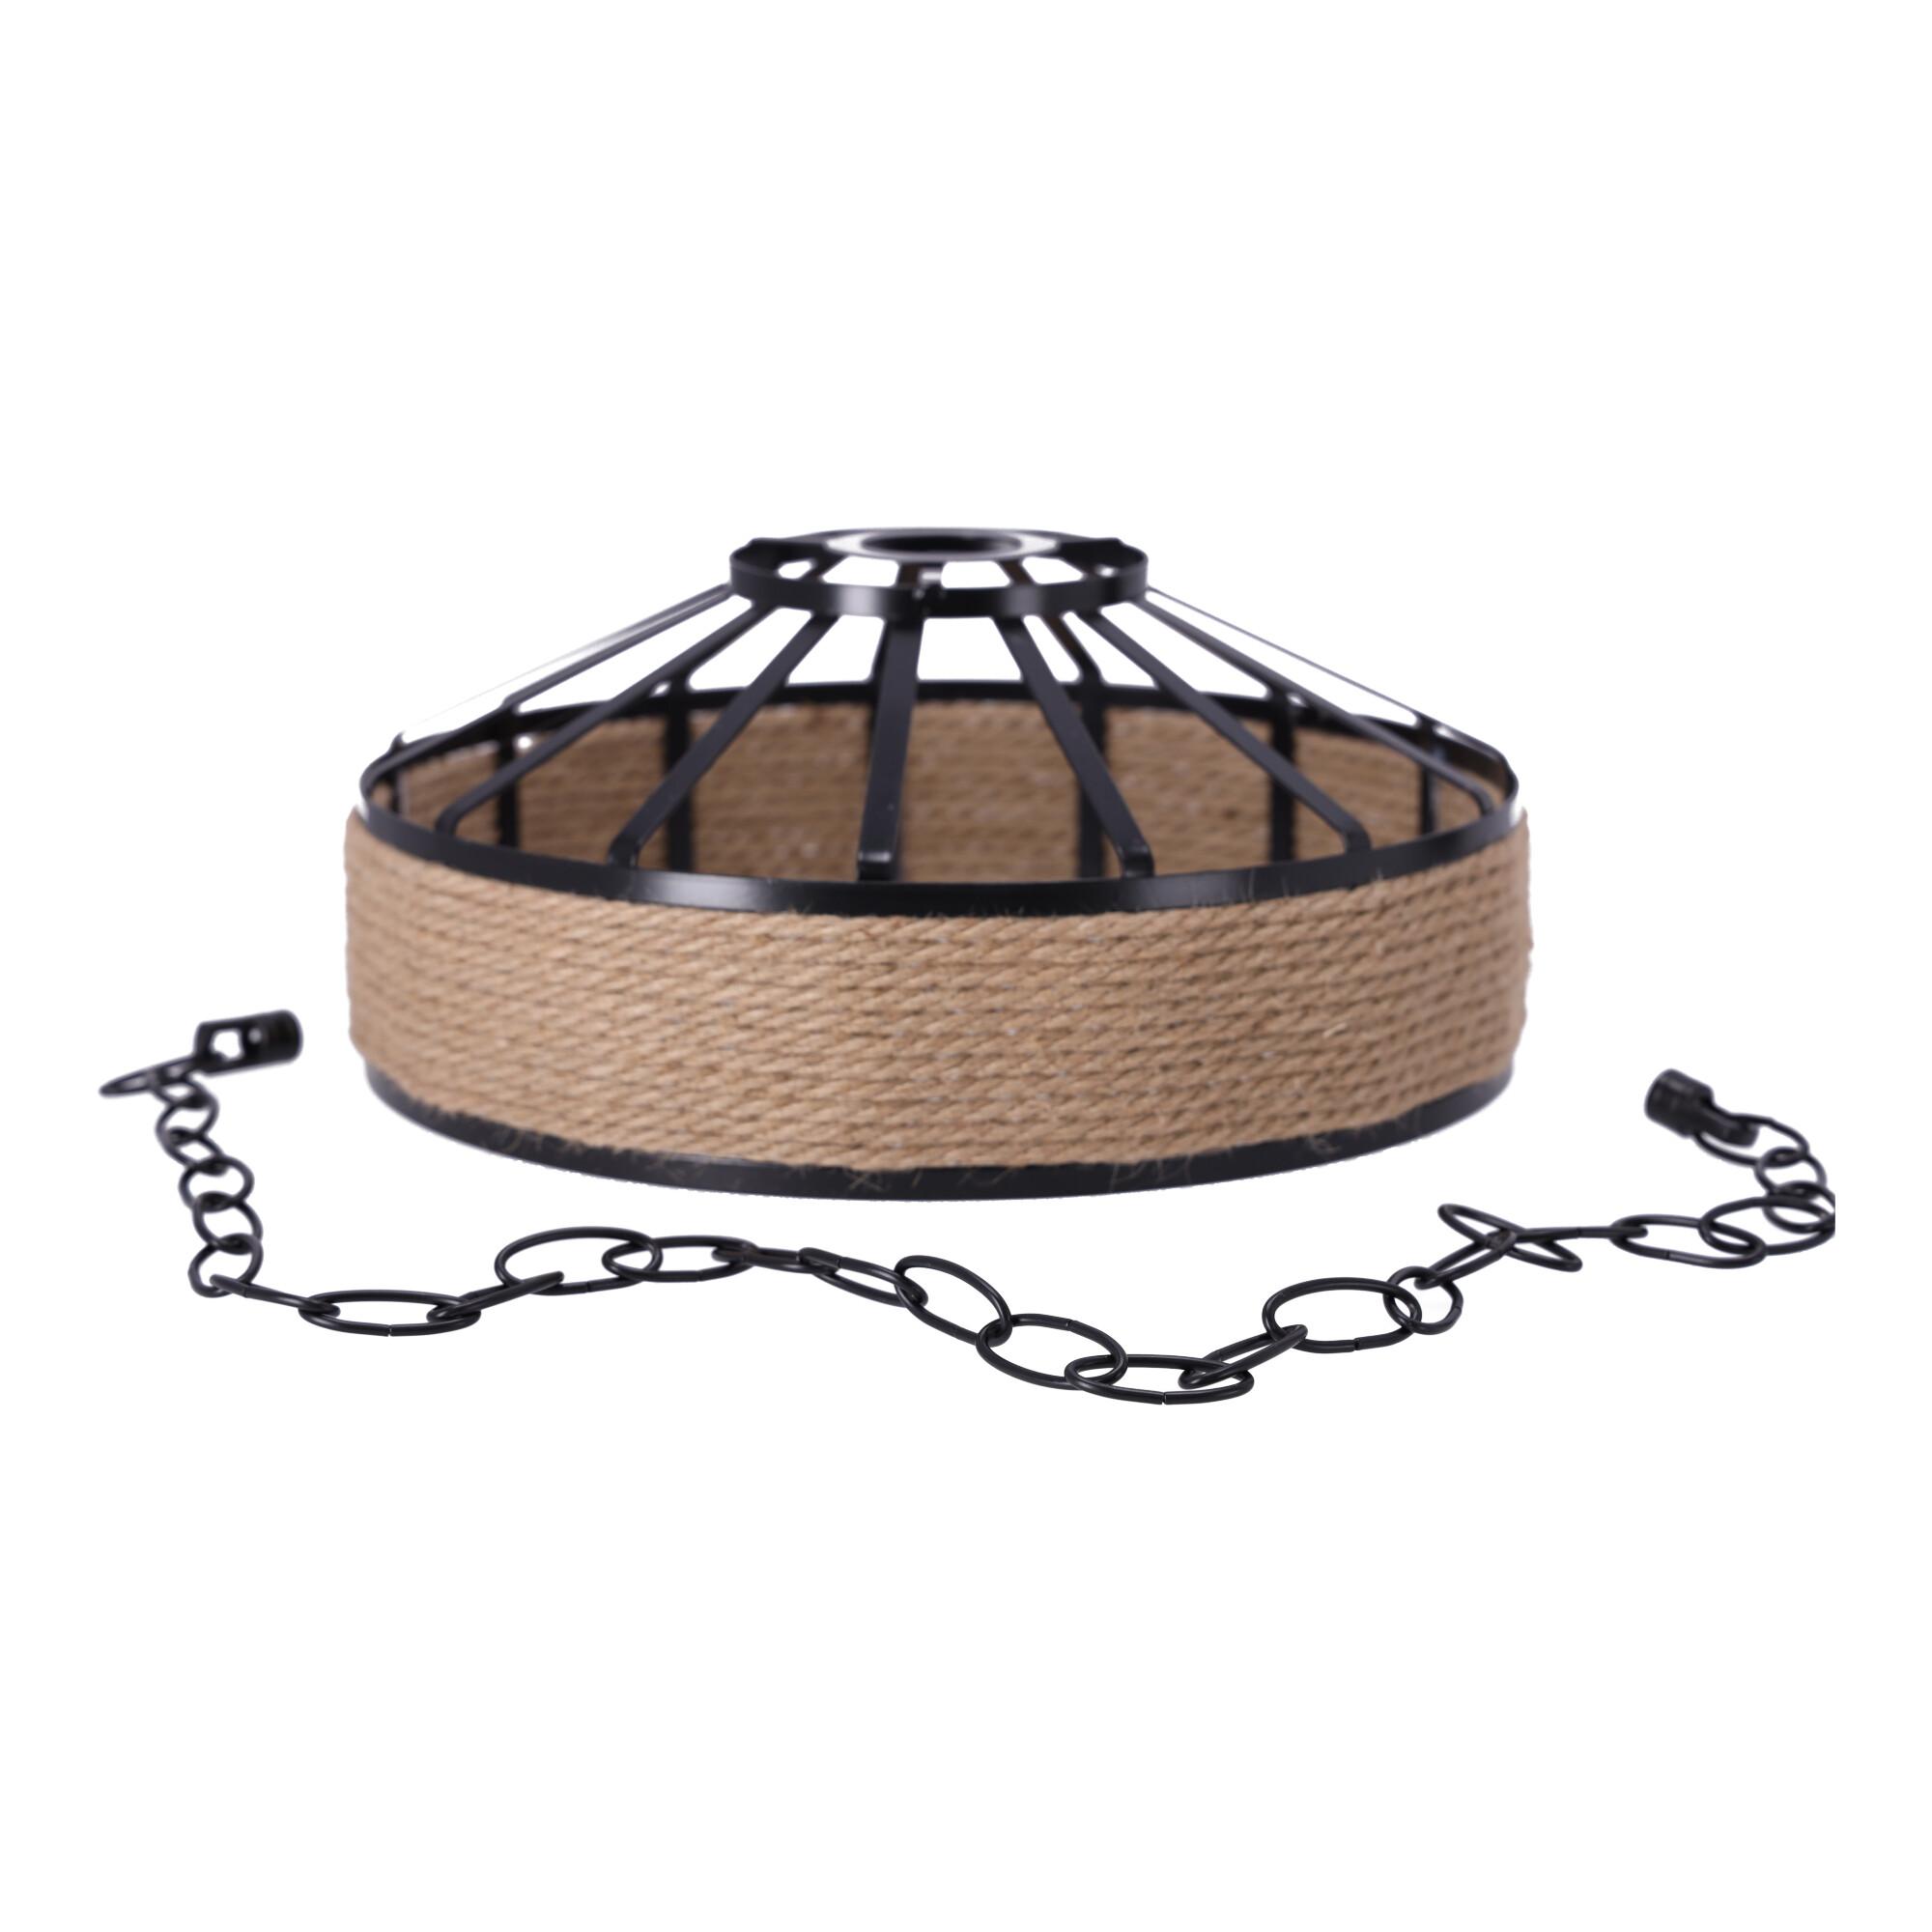 Hemp rope ceiling lamp on chain - diameter 50 cm